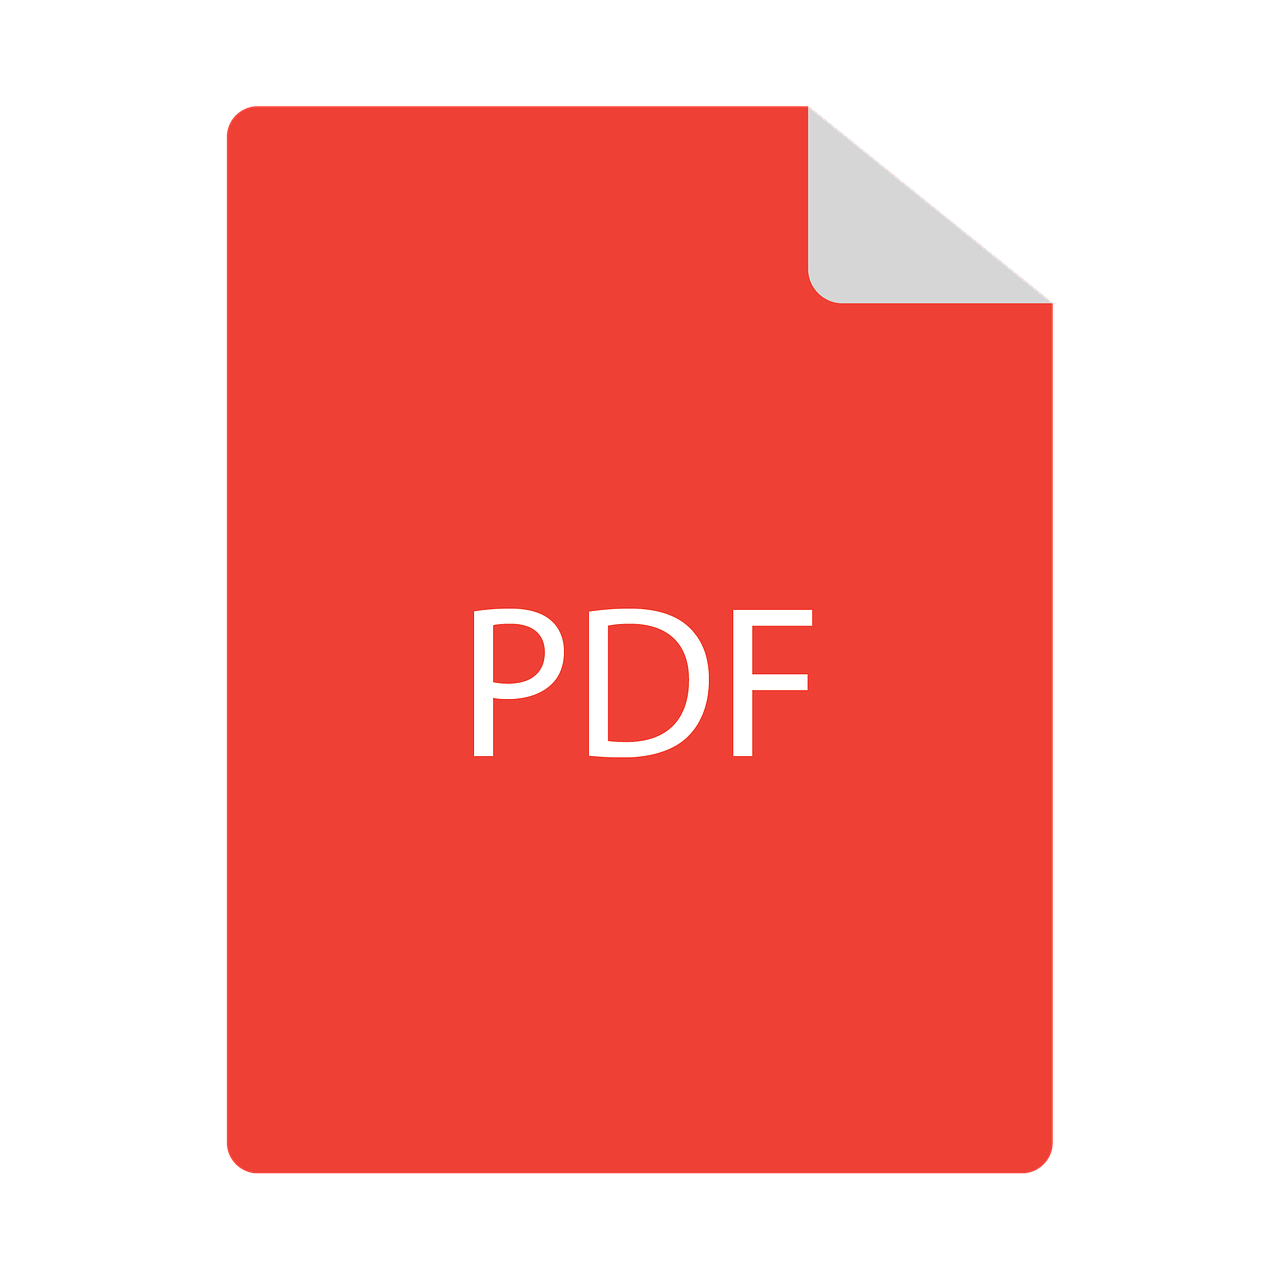 pdf, miniature, file